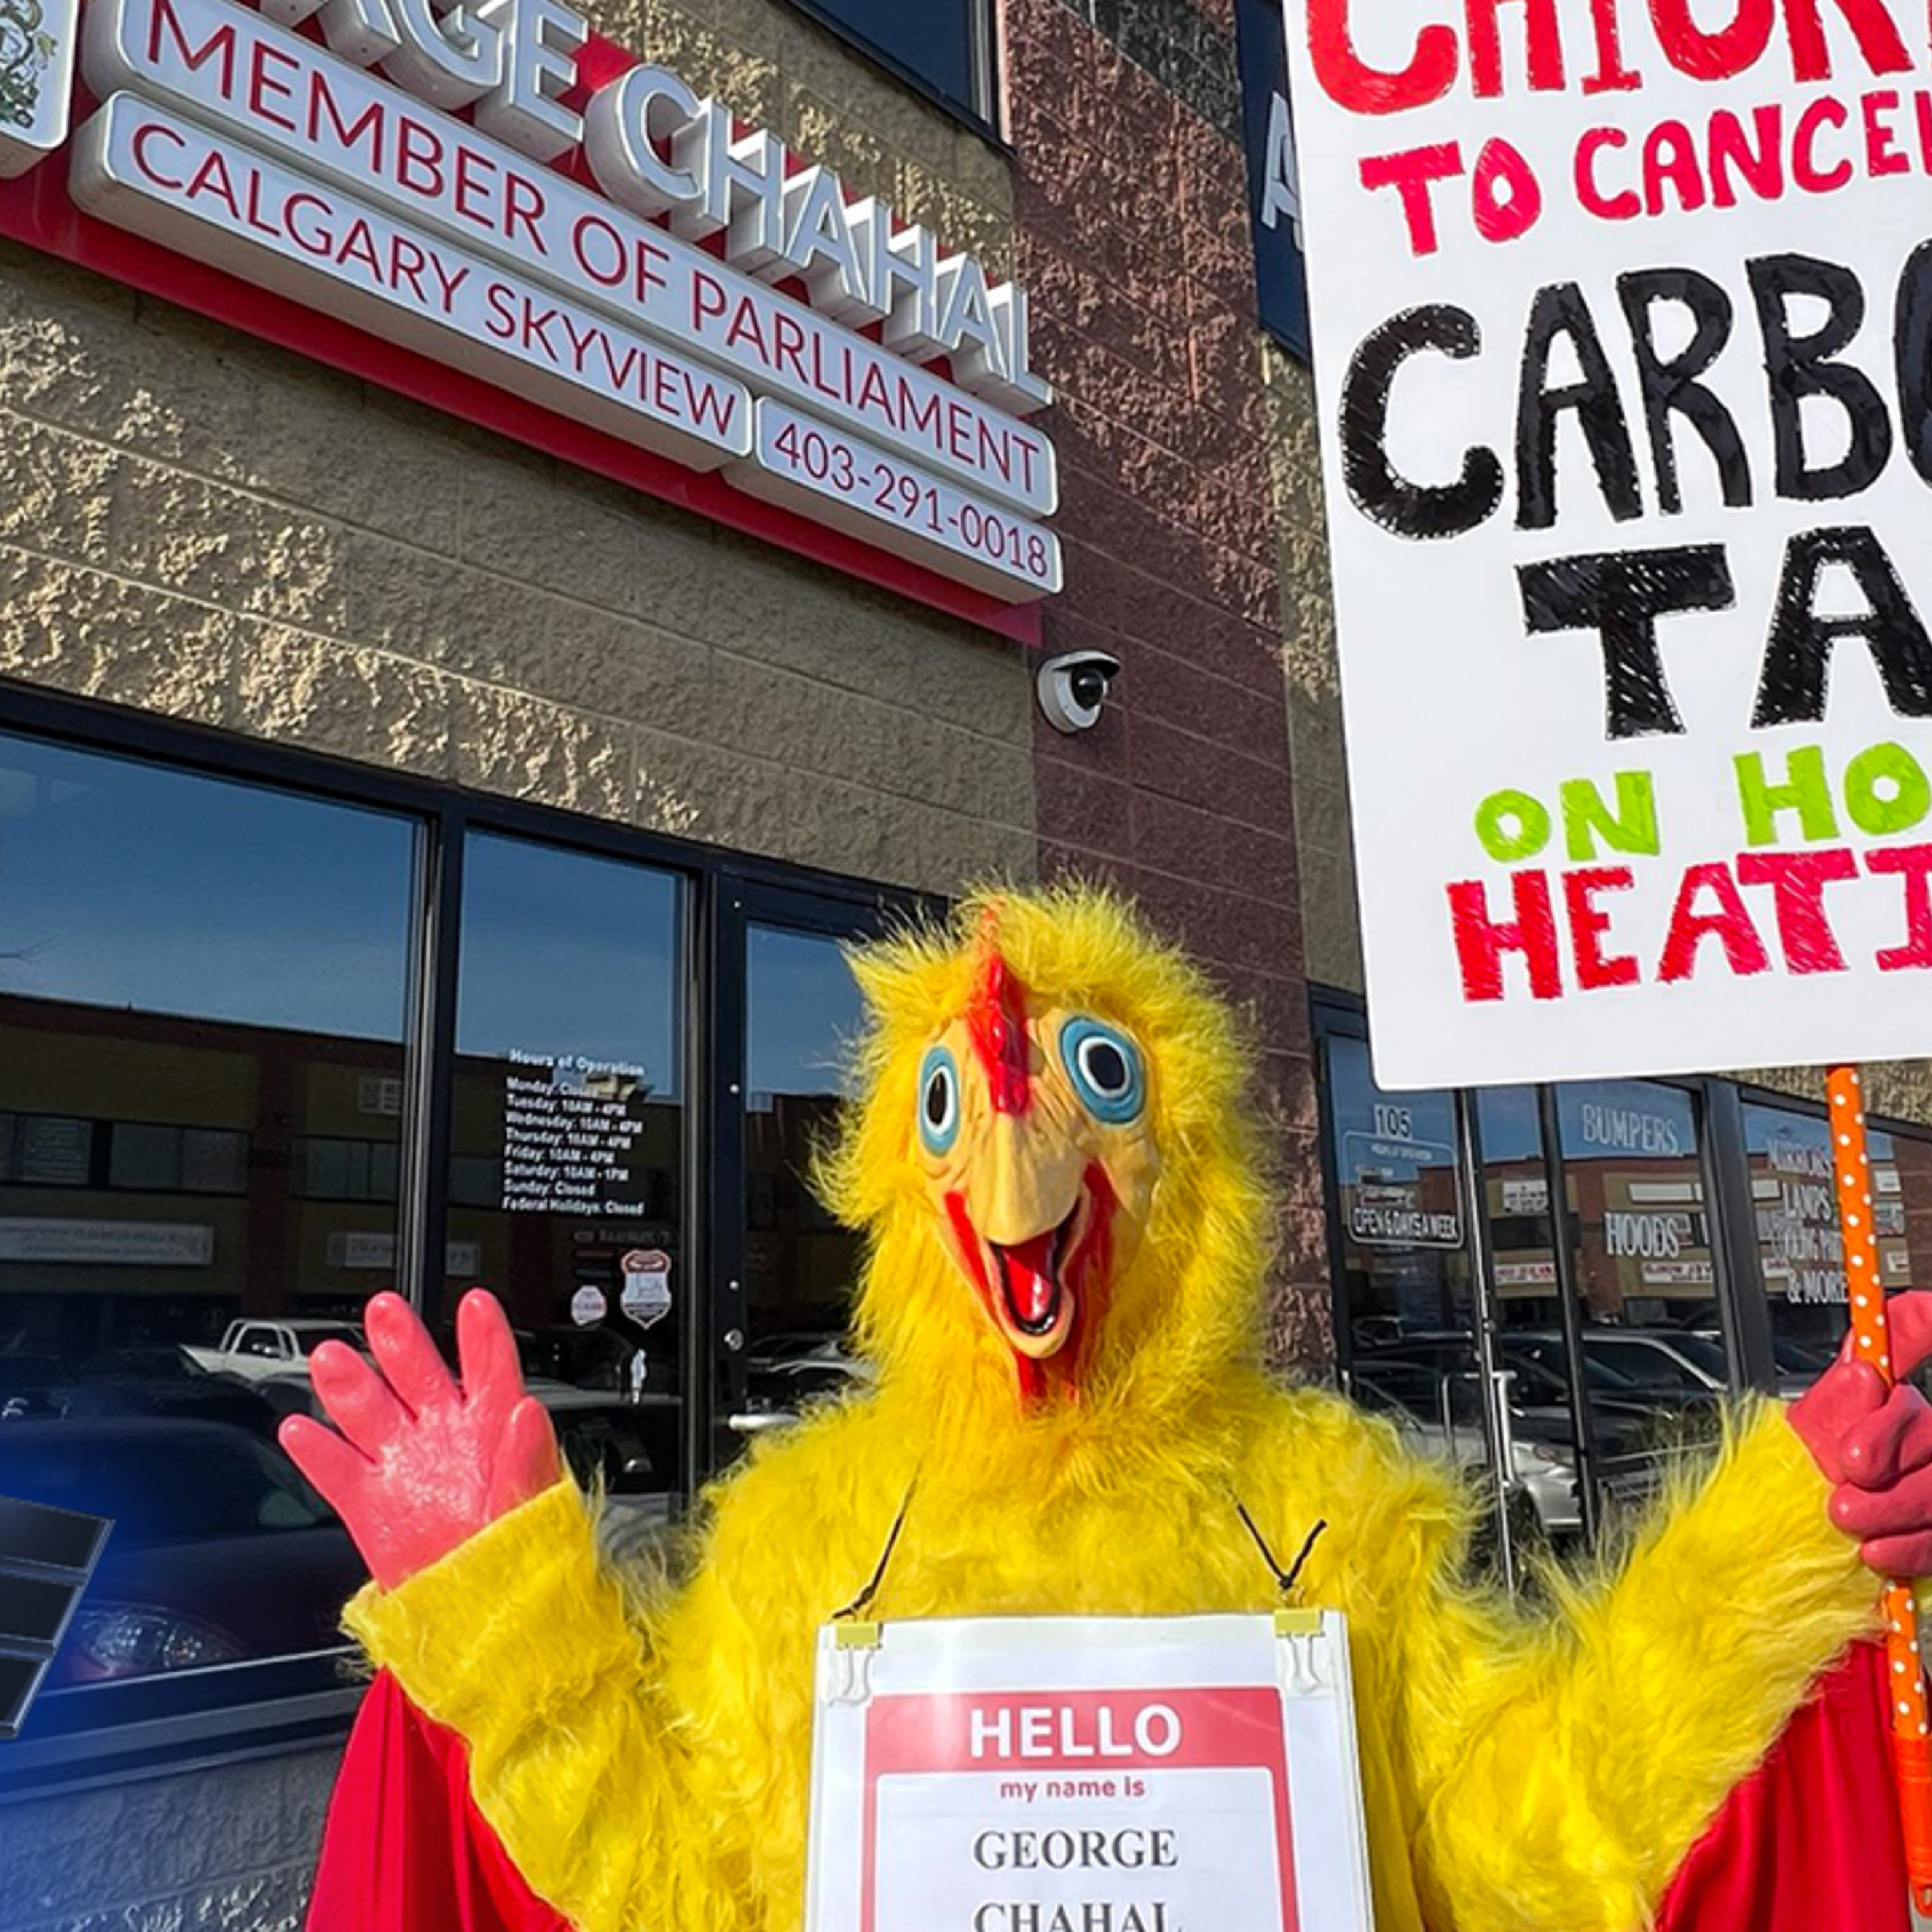 SHEILA GUNN REID | Most Liberal MPs are 'too chicken' to demand fair treatment on the carbon tax